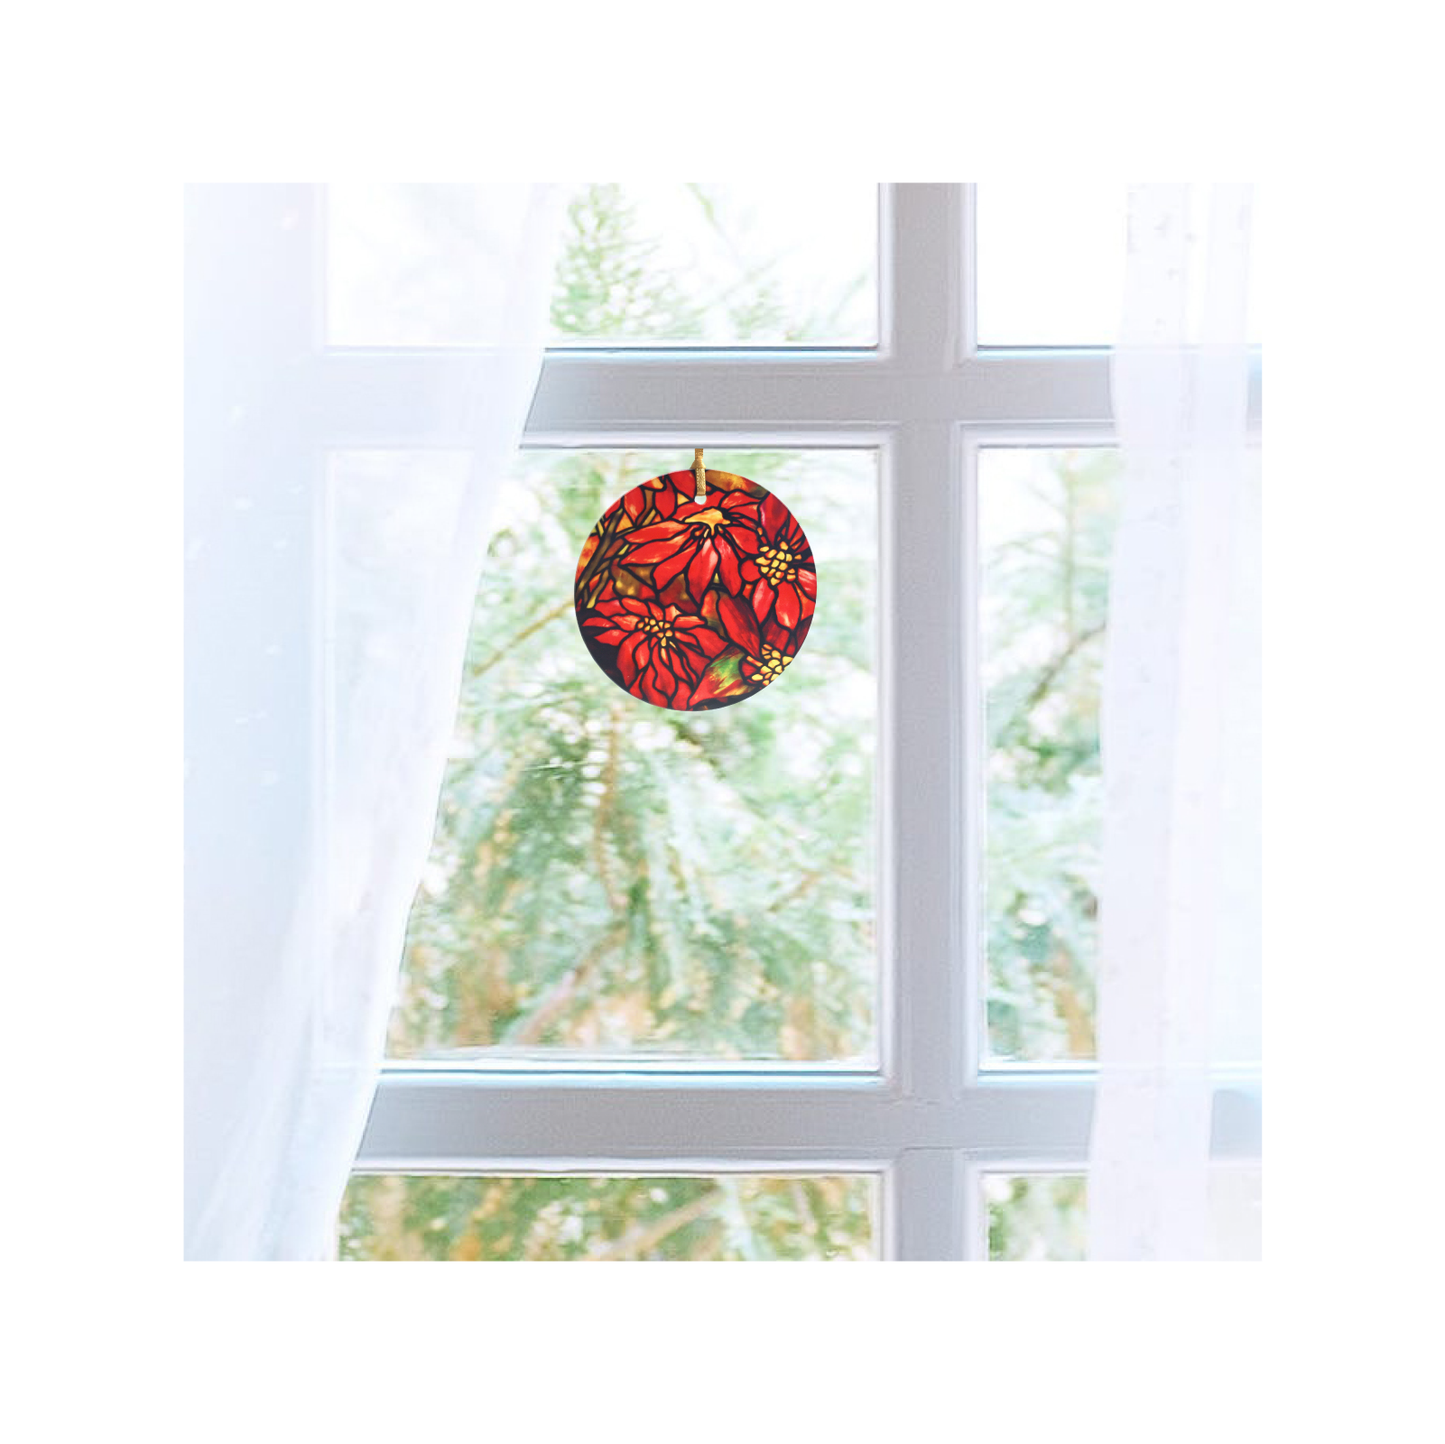 Poinsettia glass ornament / sun catcher